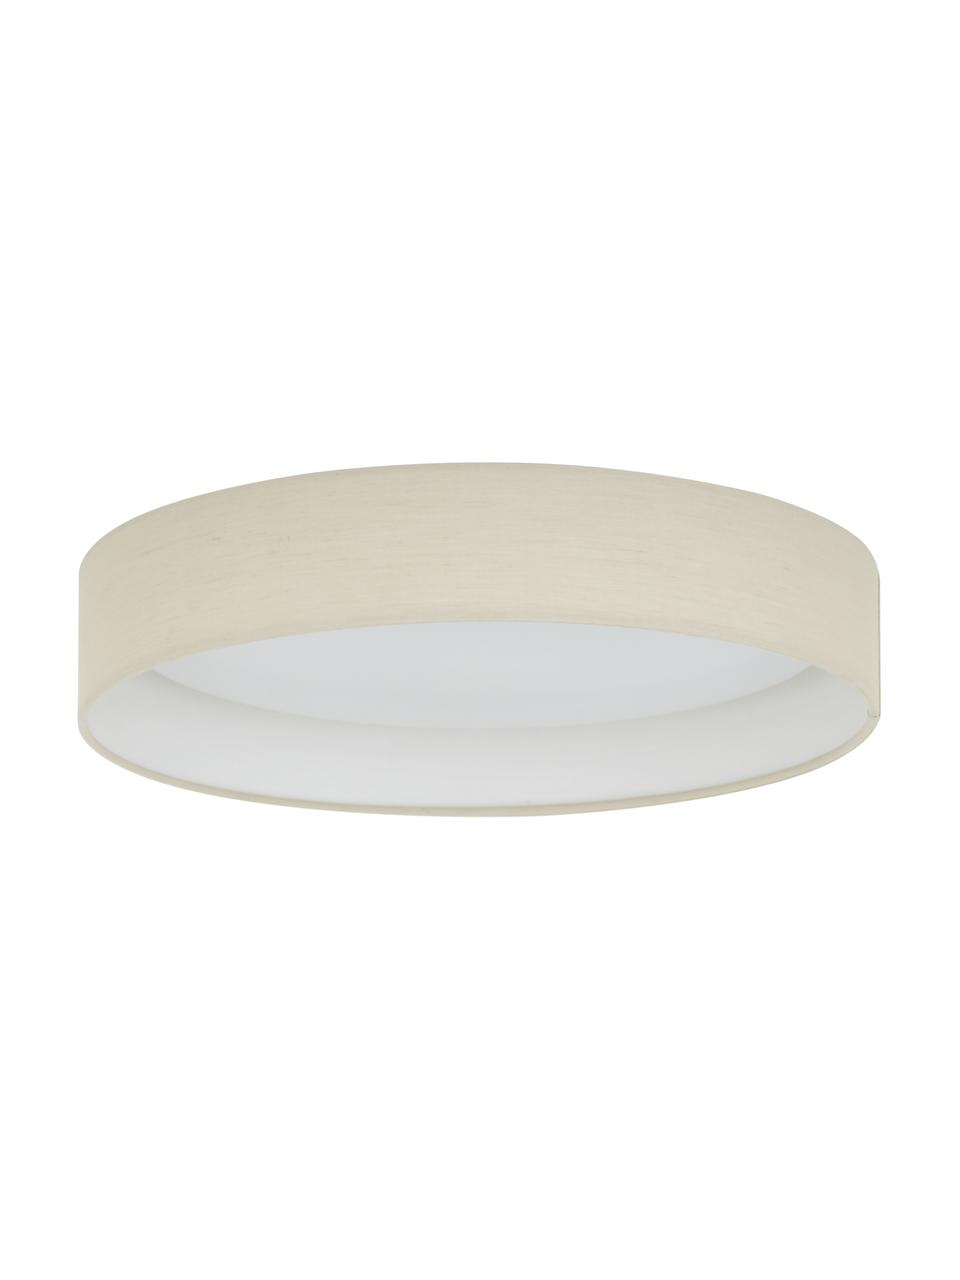 Plafonnier LED Helen, Blanc crème, Ø 52 x haut. 11 cm